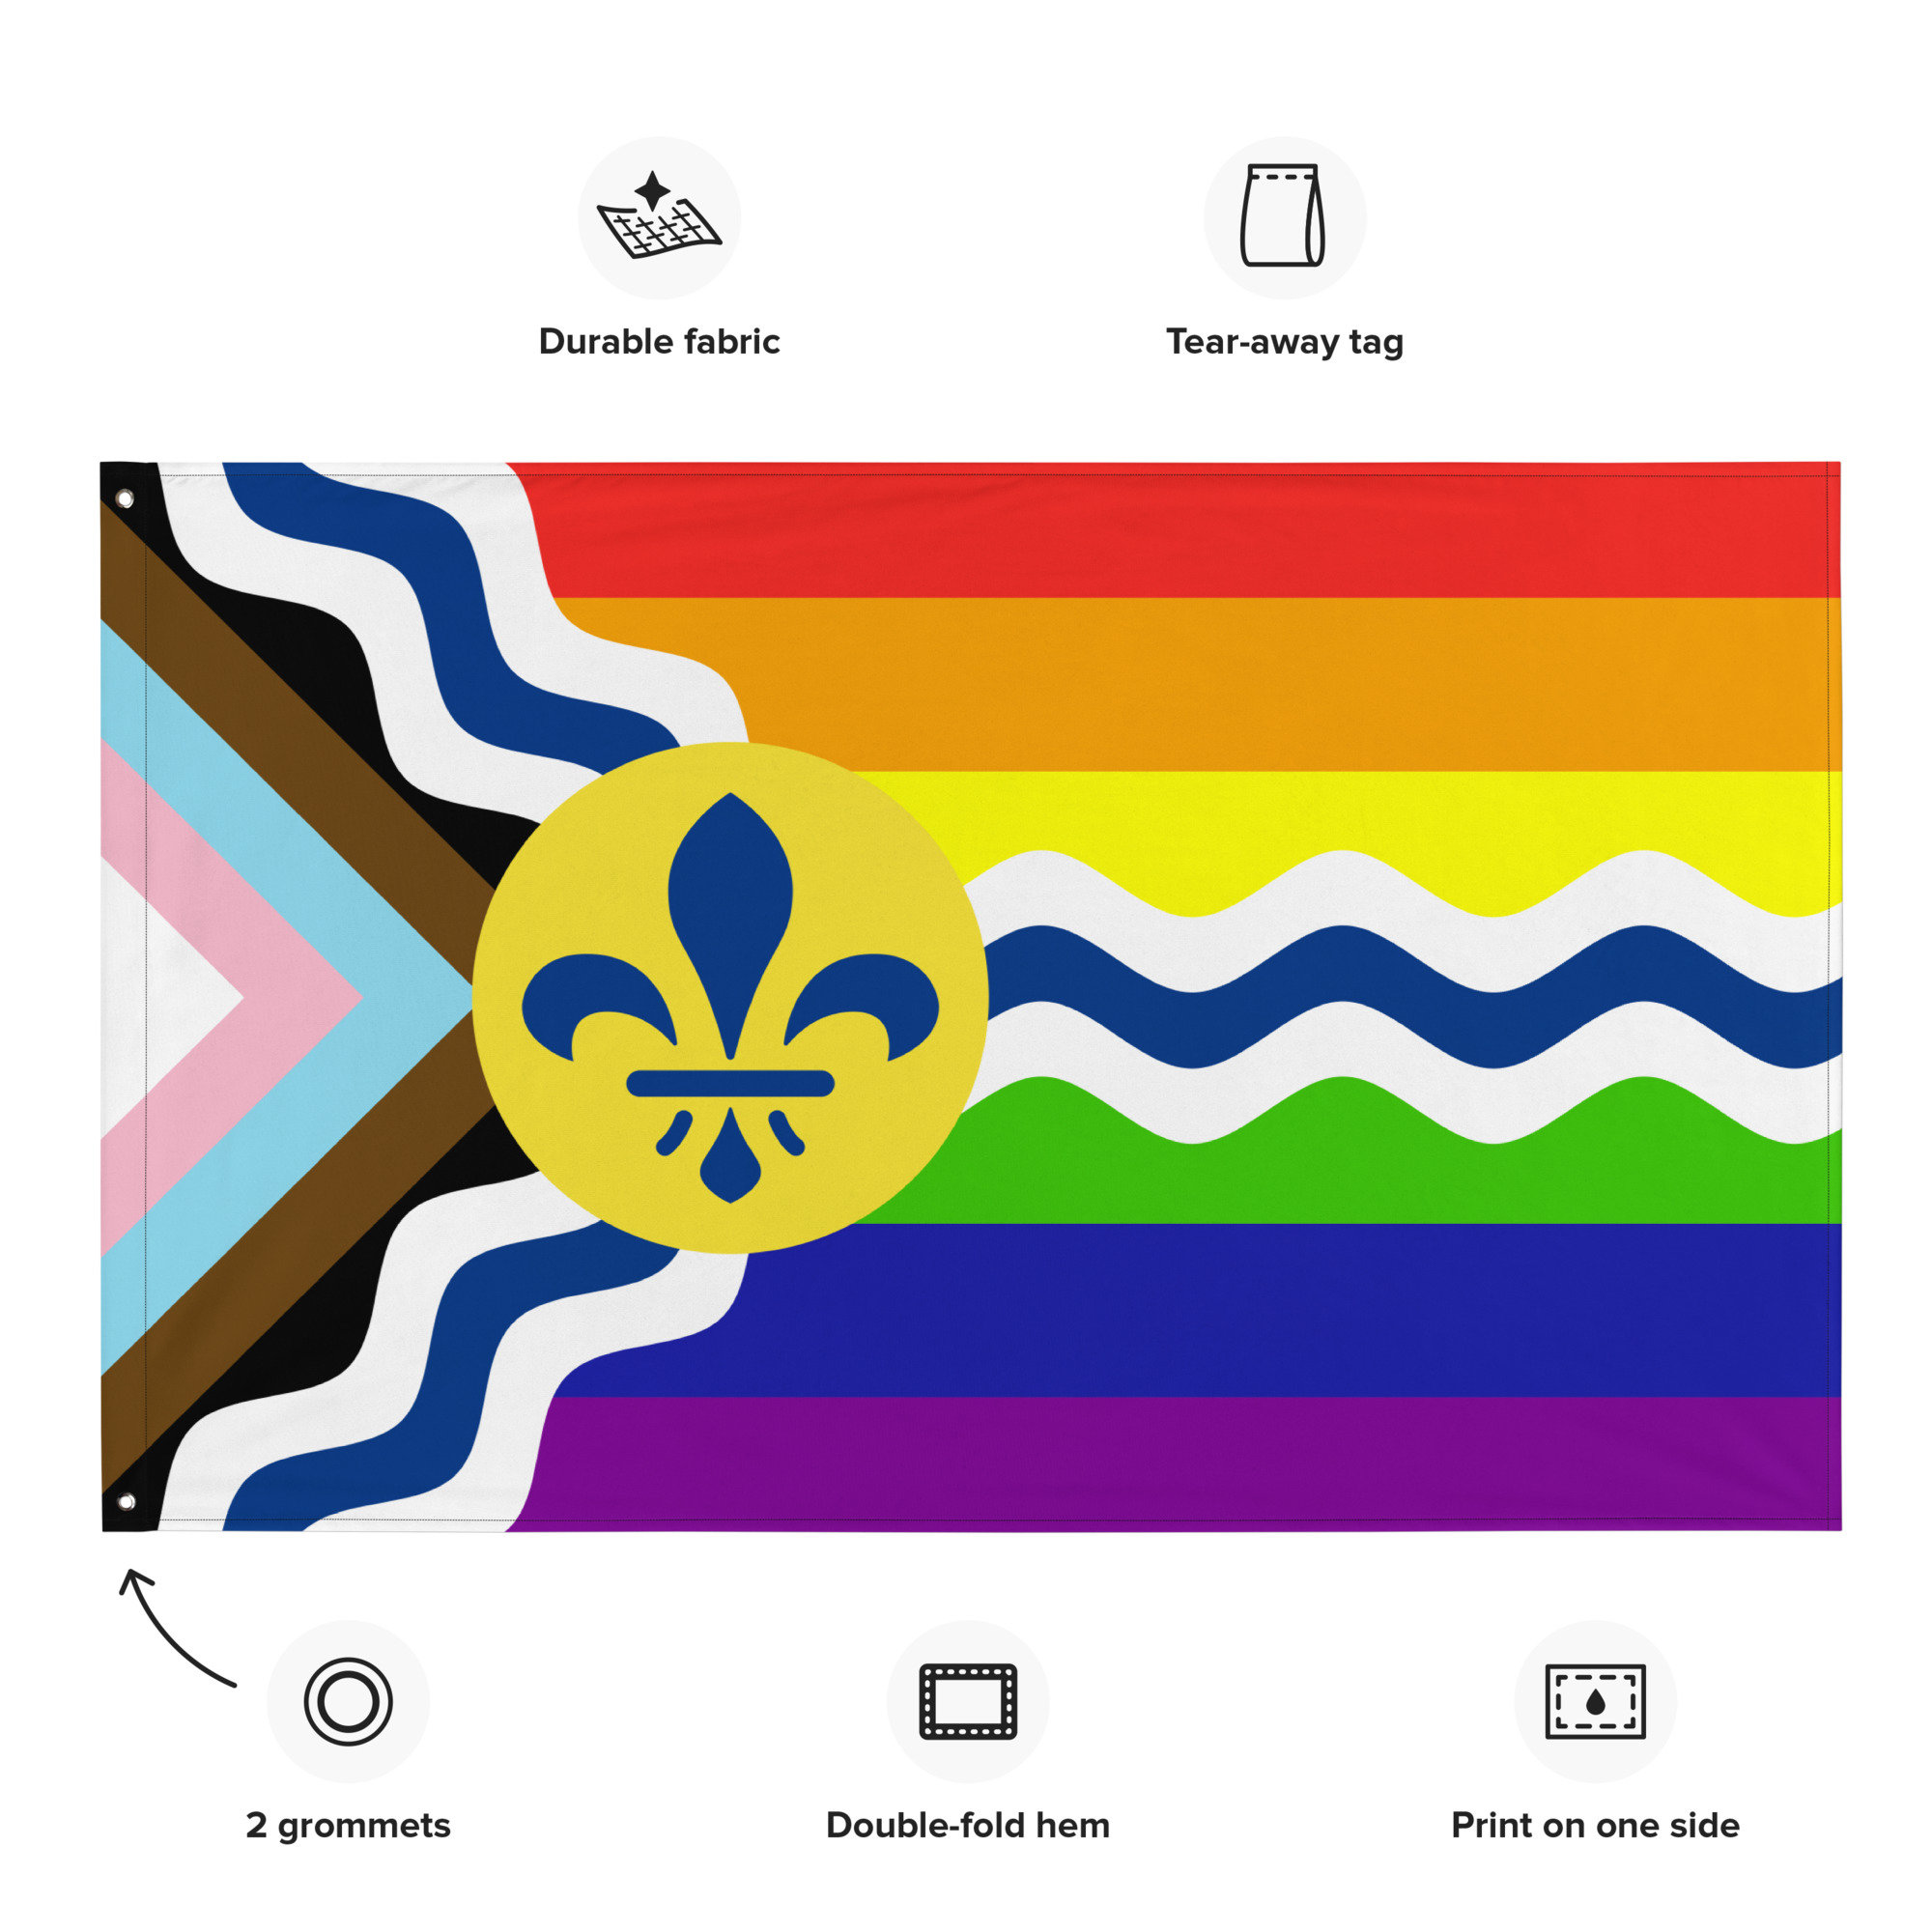 Flag of St. Louis, Missouri Luggage Tag